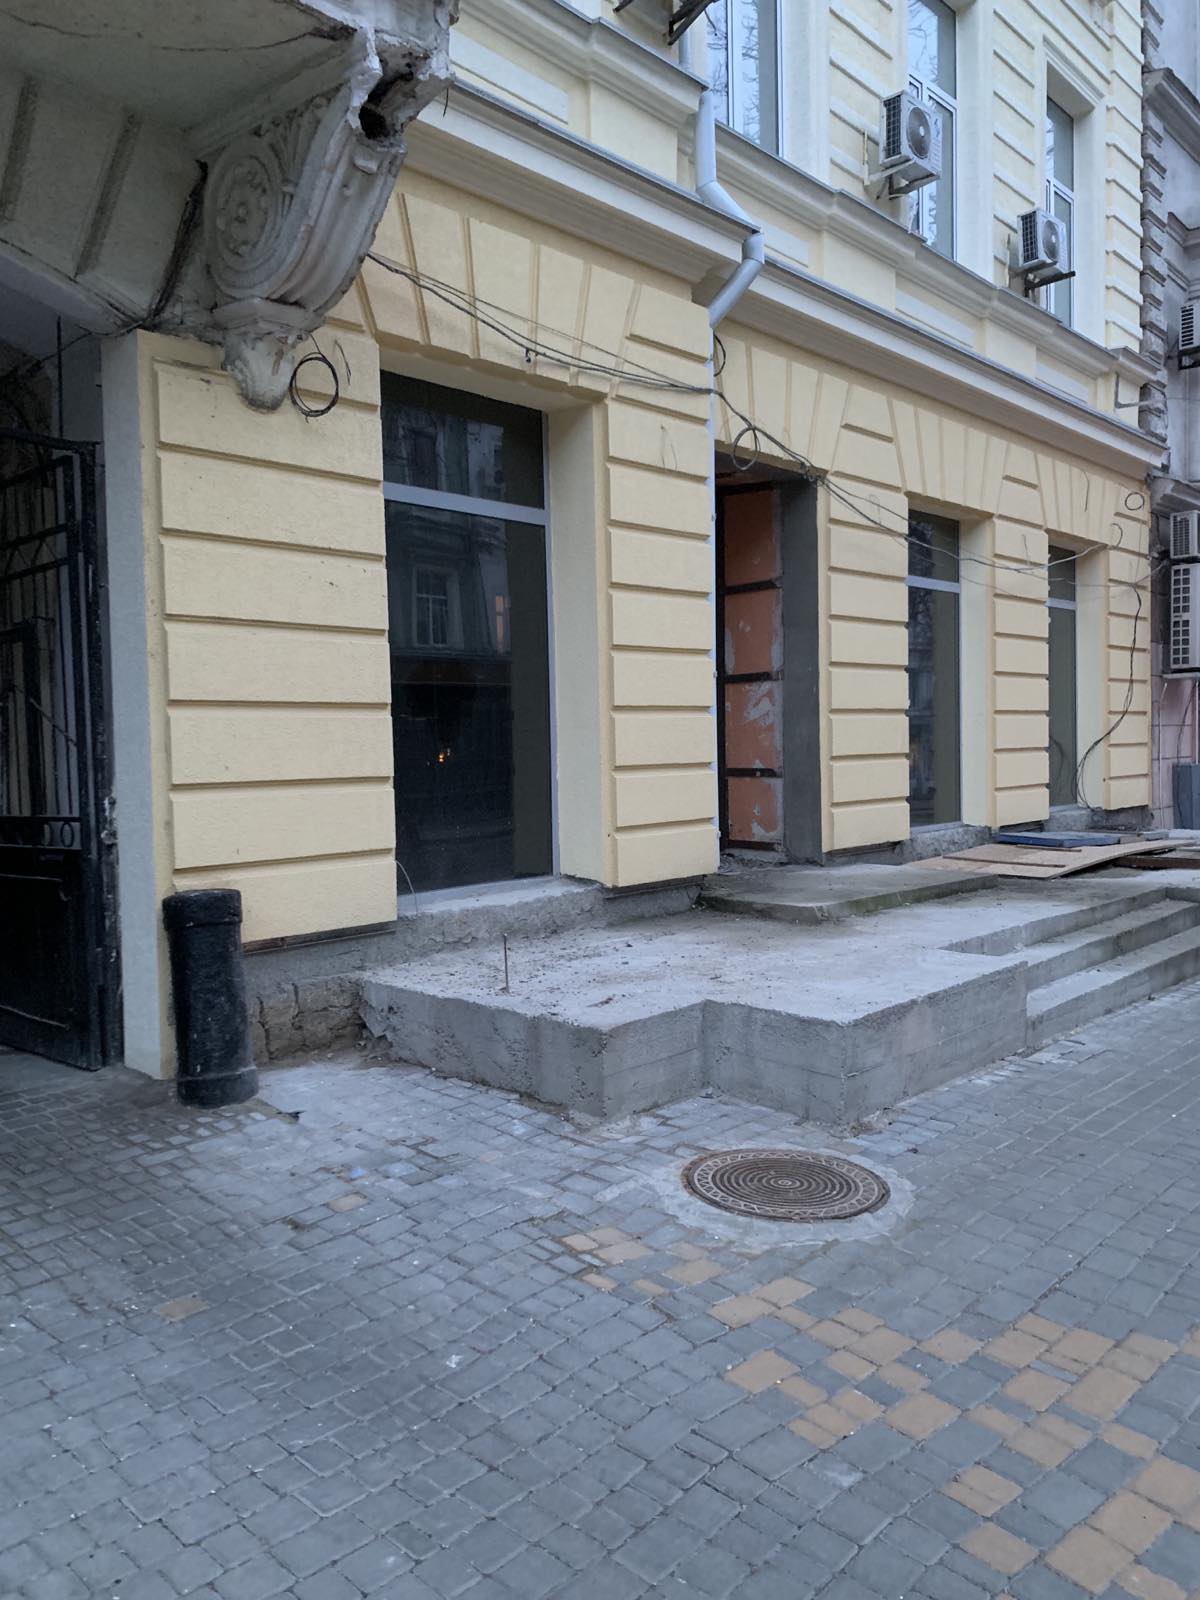 Помещение ресторана на ул.Екатерининской, общ.пл. 360 кв.м ID 52100 (Фото 2)